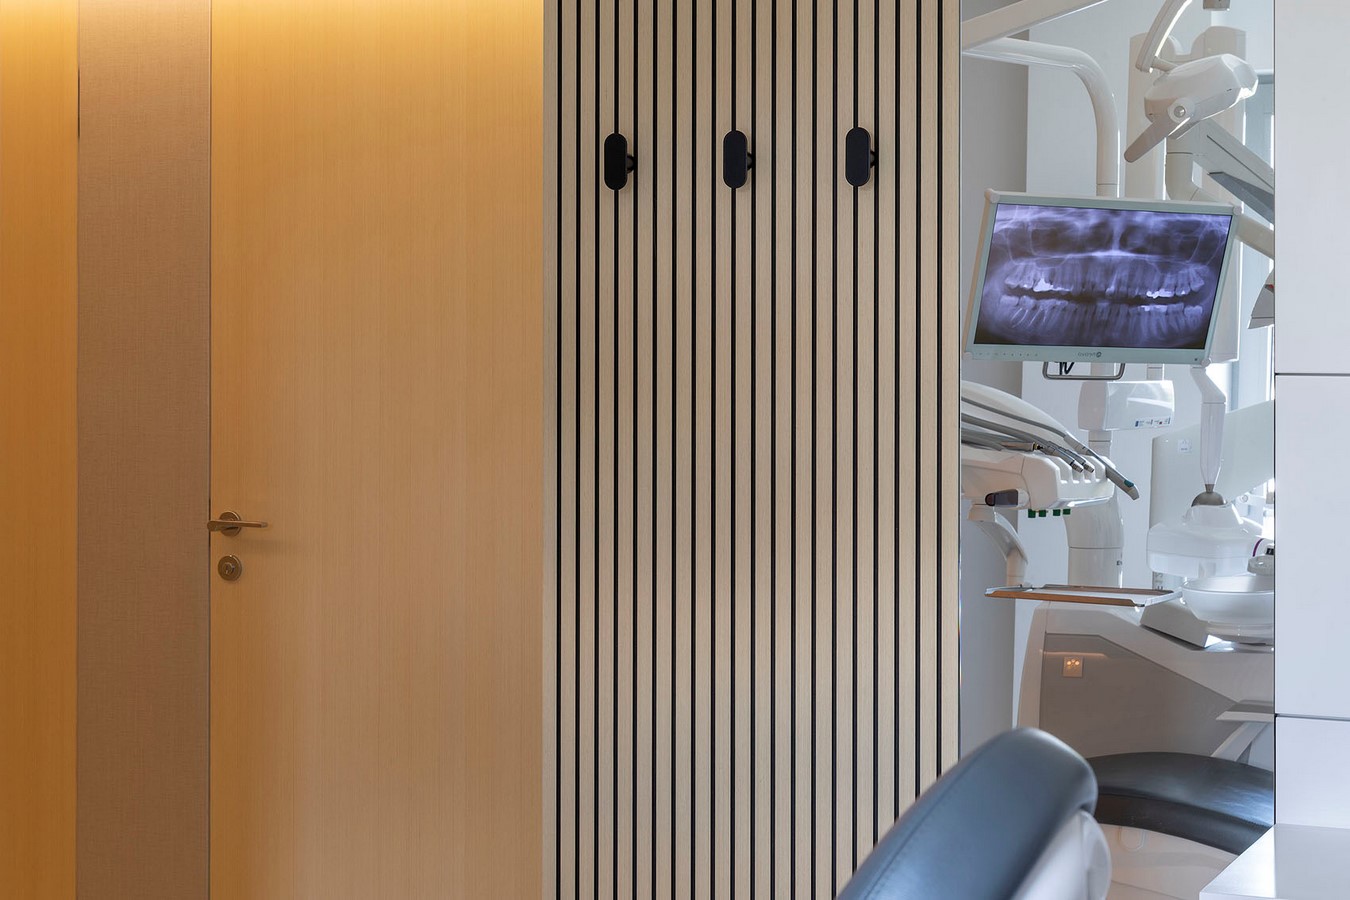 Oridnet dental clinic interior by Wierszyllowski i Projektanci - Sheet6